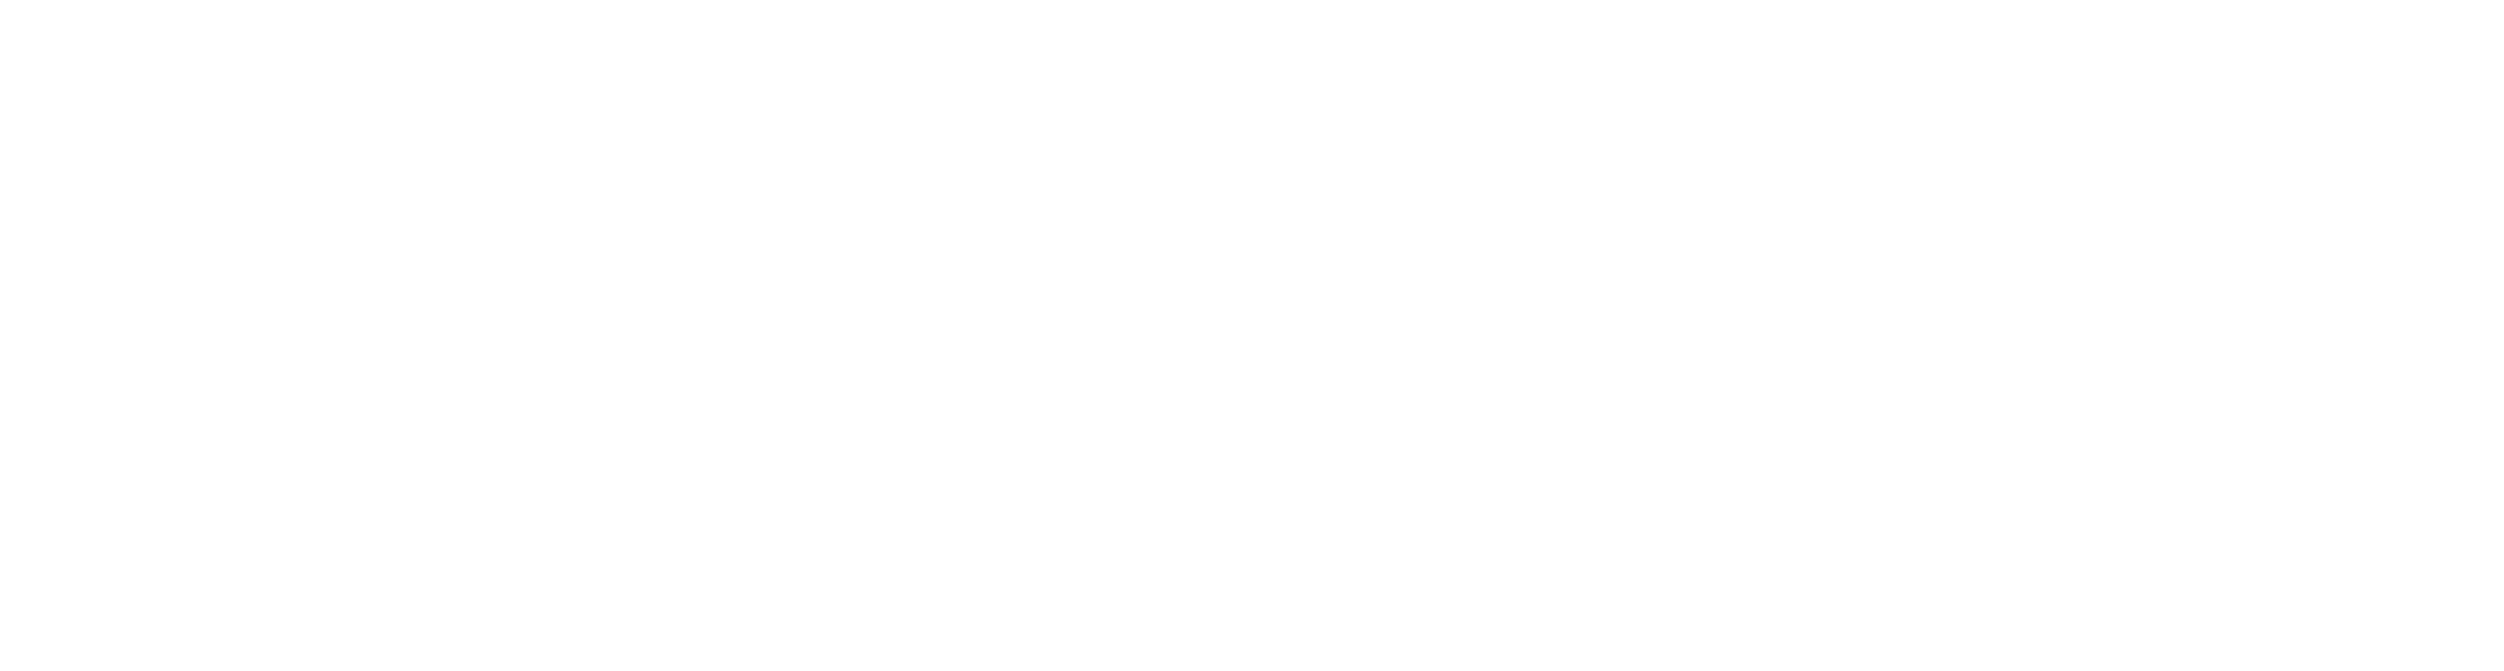 Lippman connects